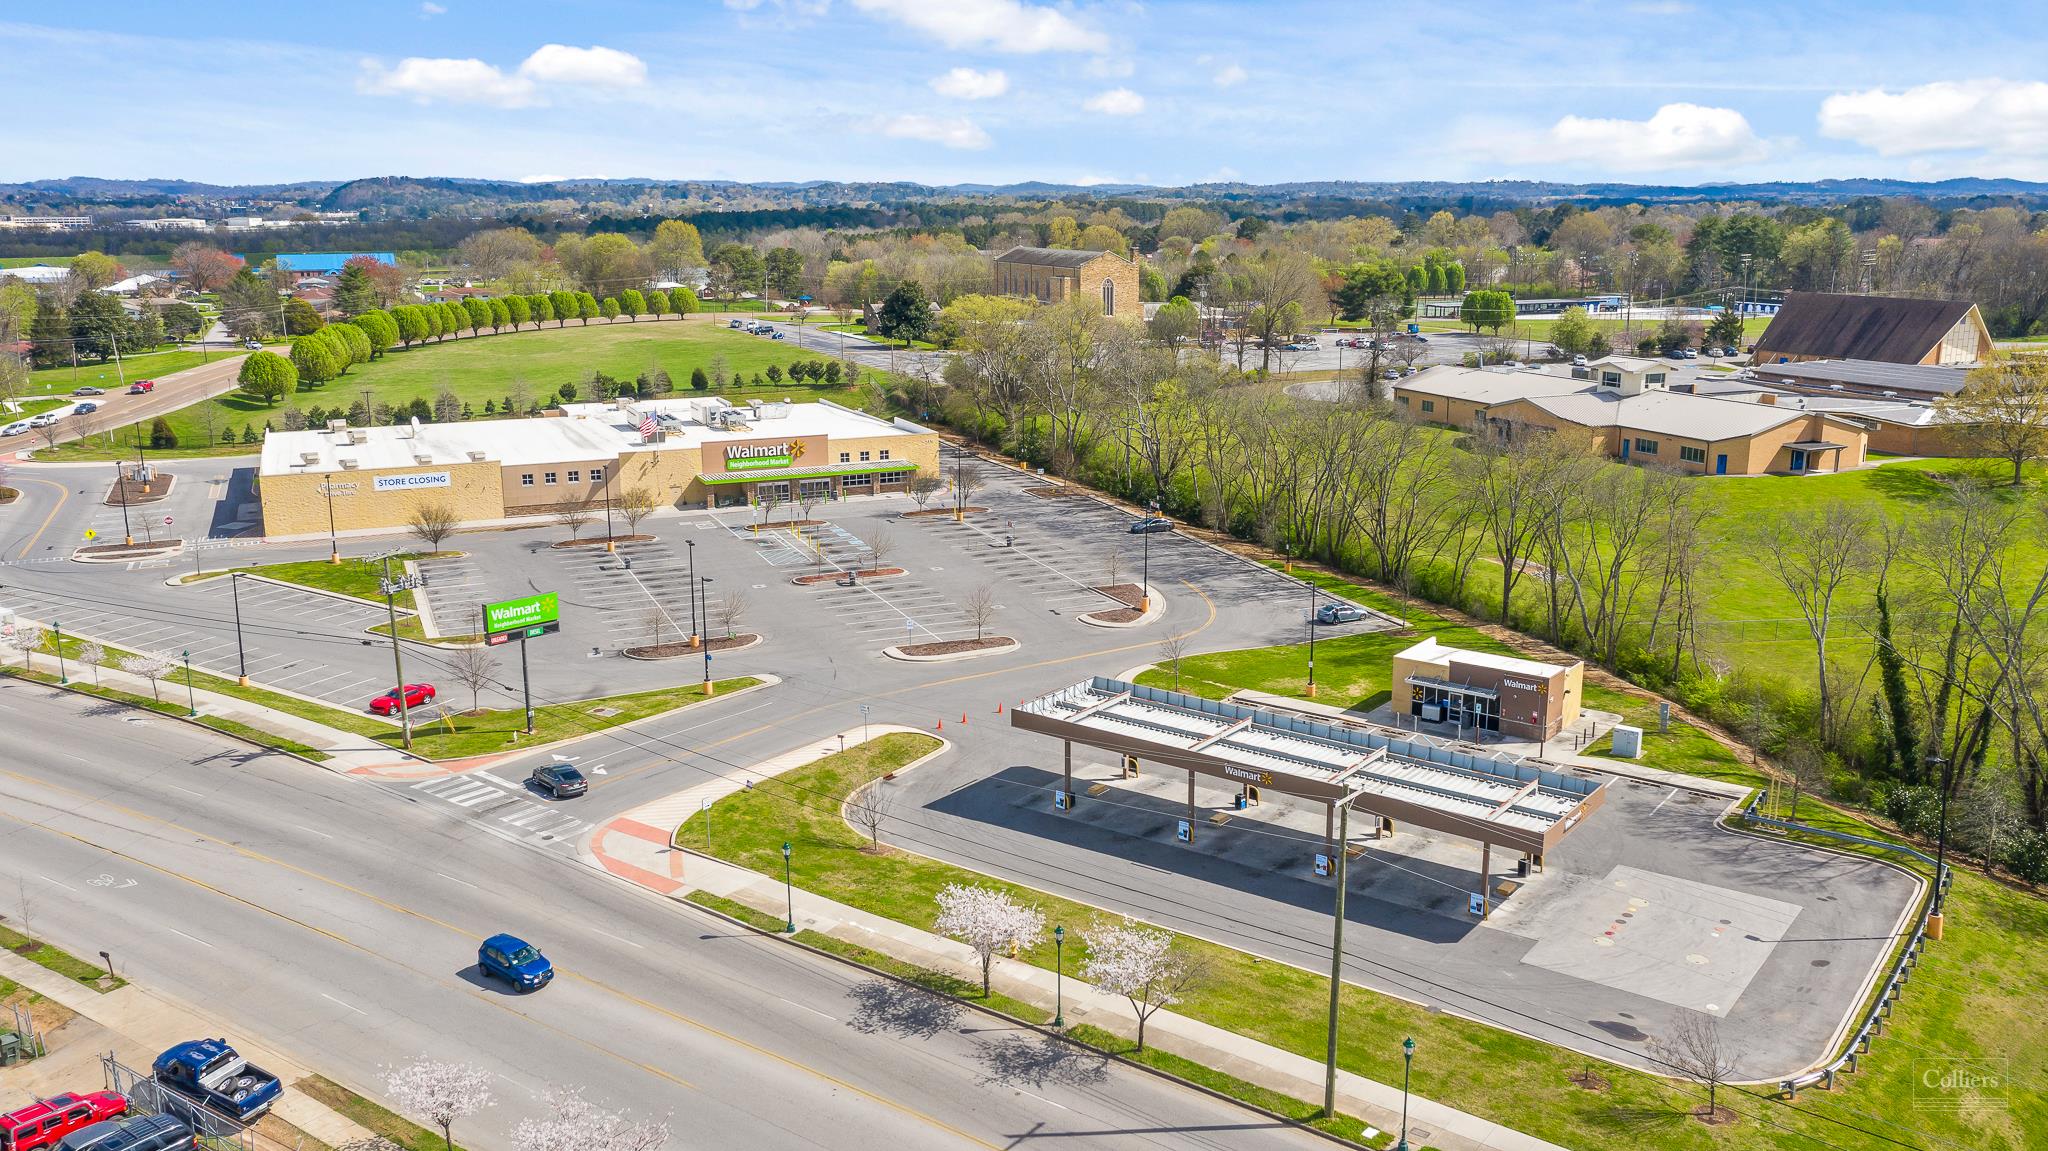 Walmart to close Neighborhood Market on Shallowford Road in Chattanooga